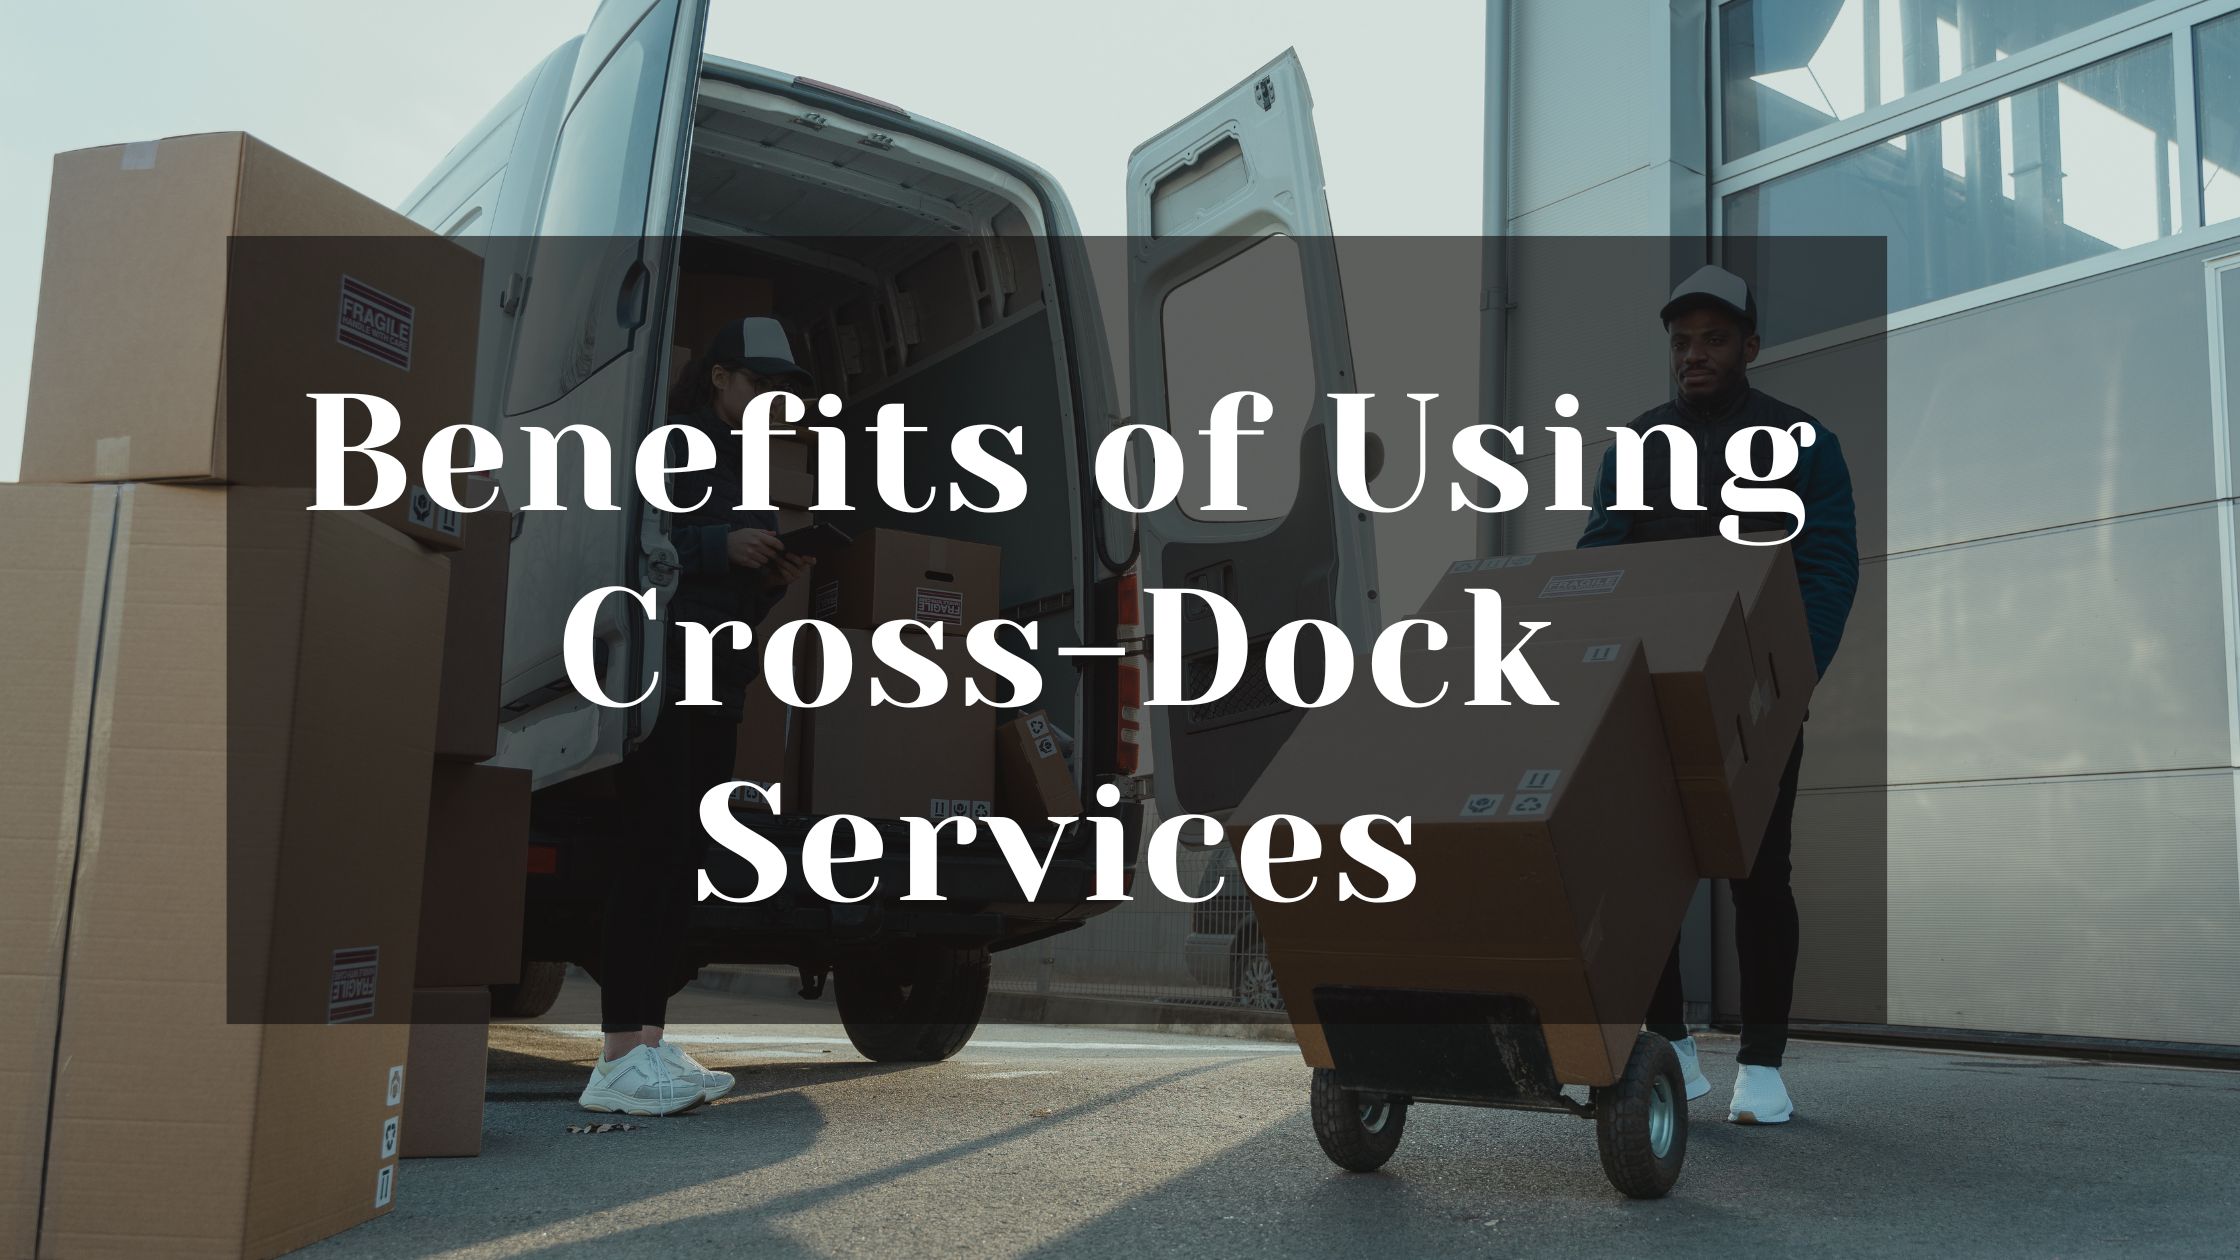 Cross dock services